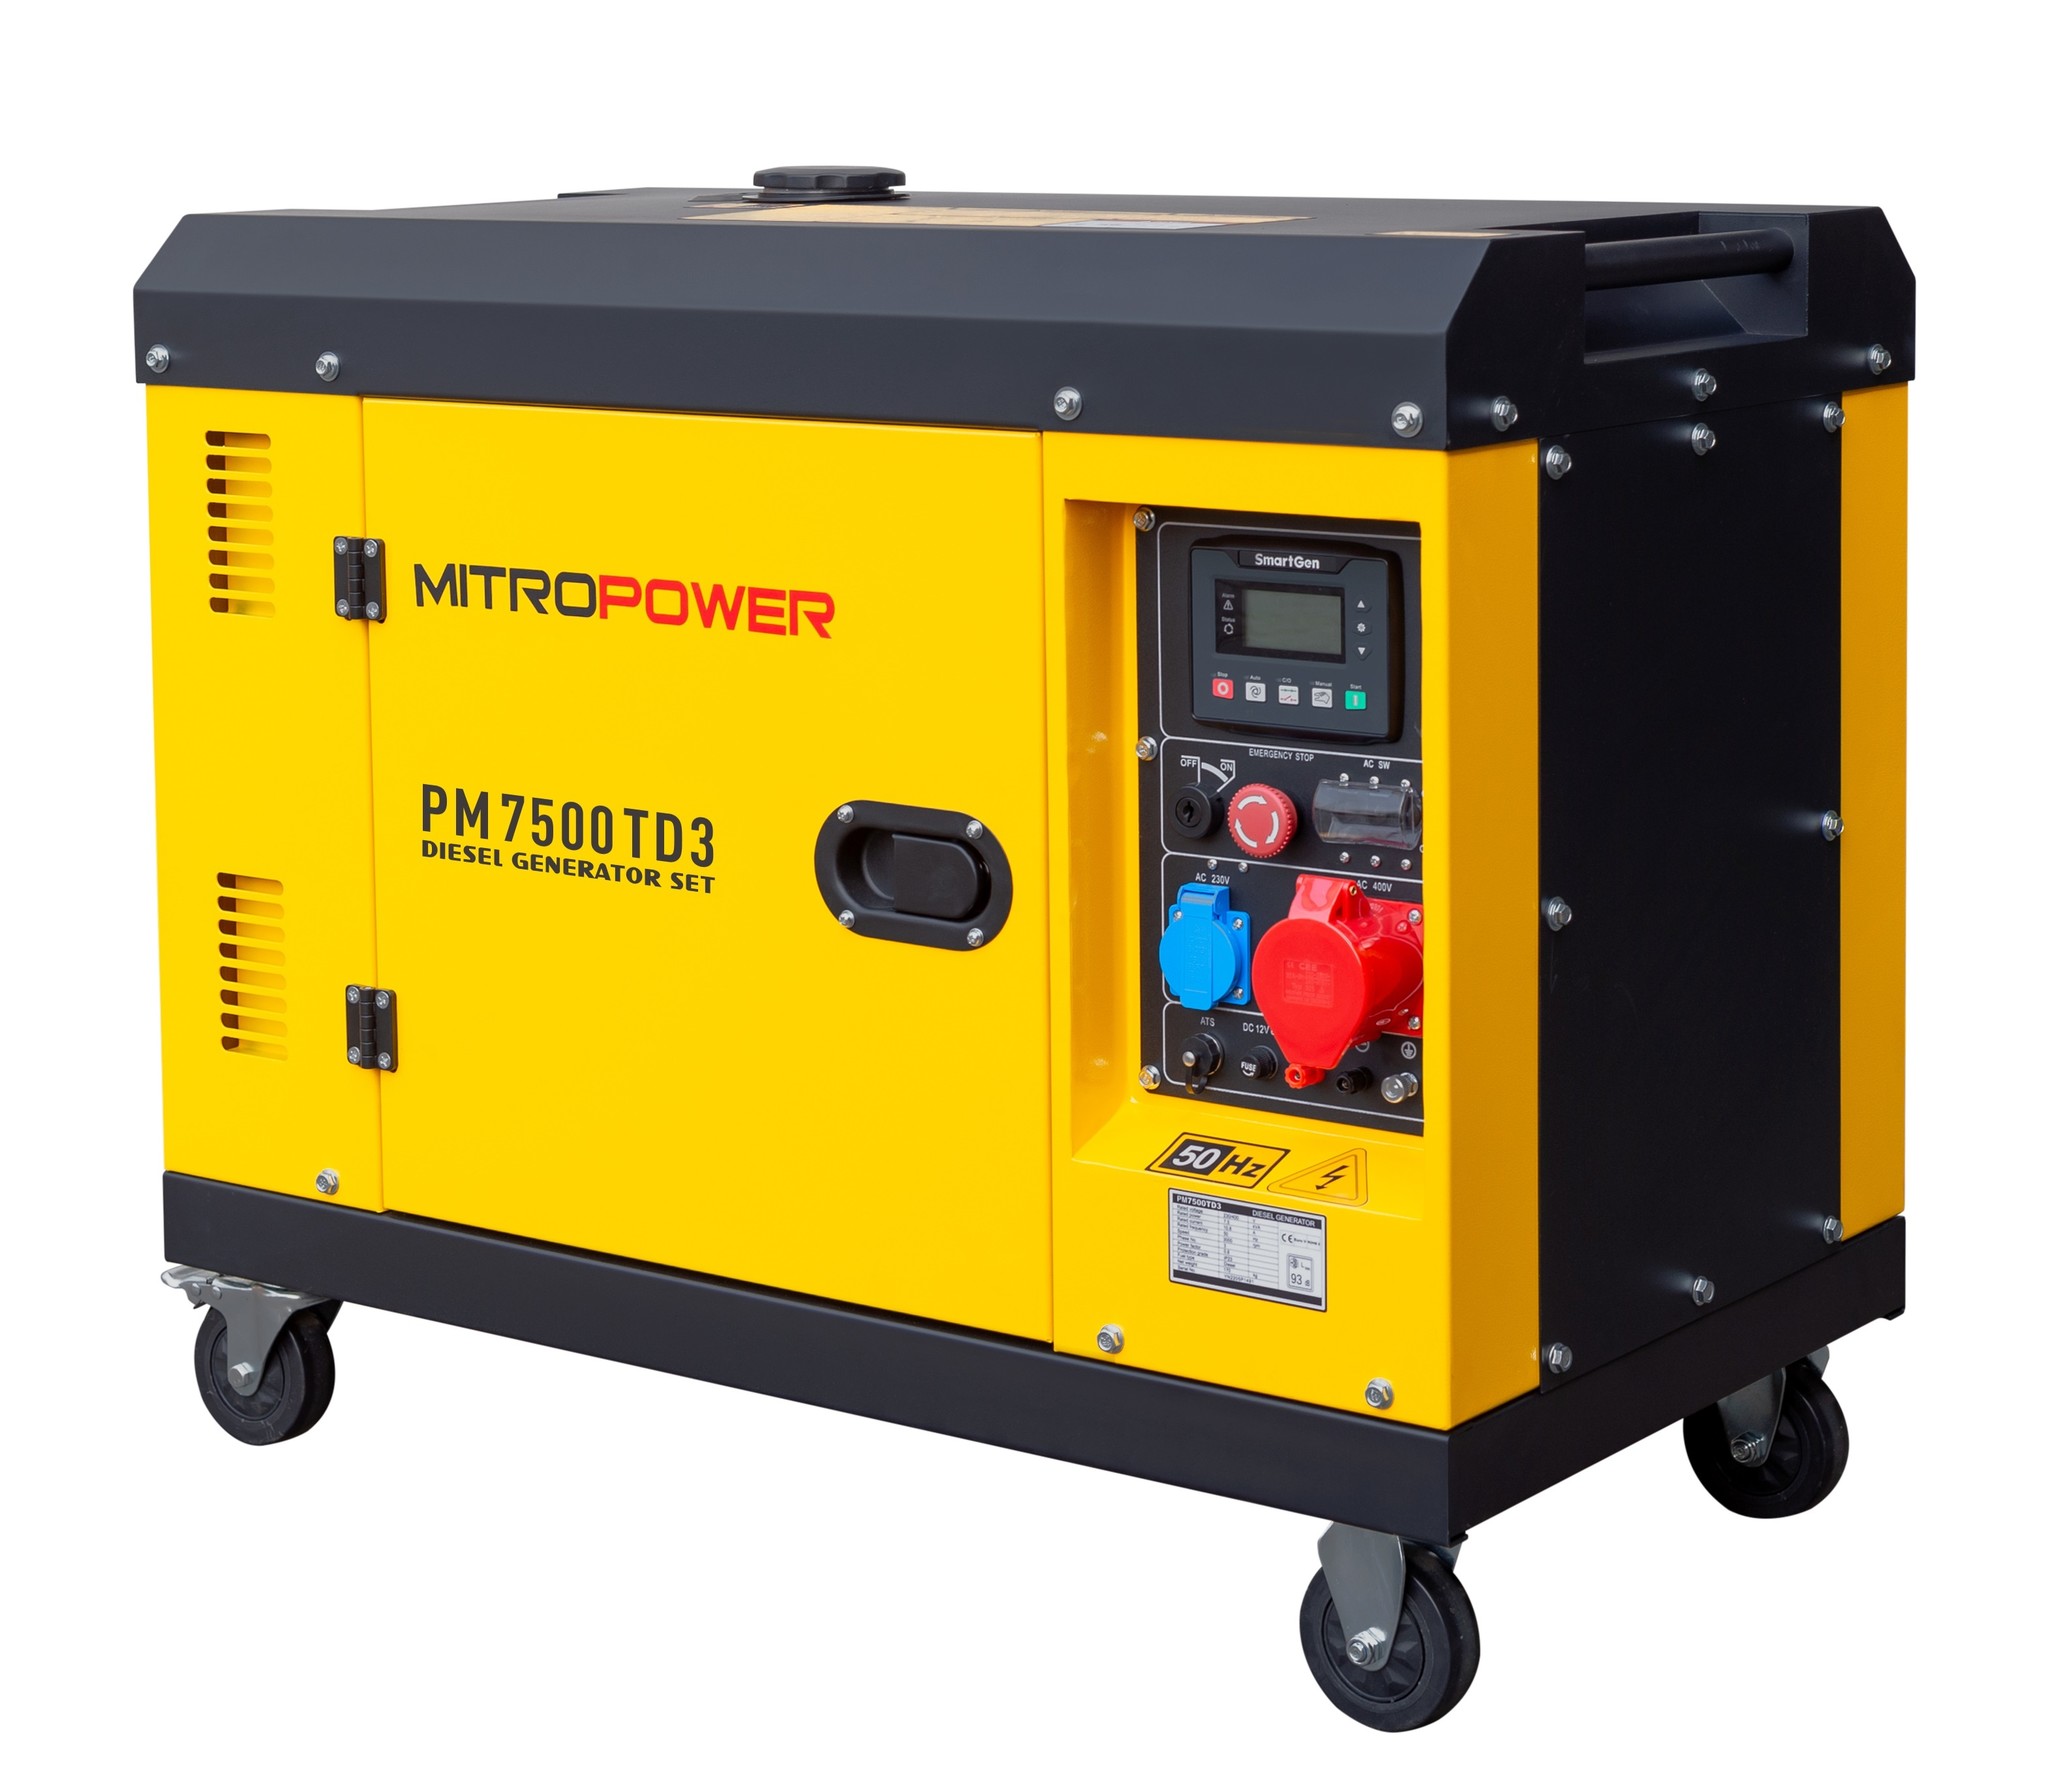 Mitropower PM8000i - 7500W - 110 kg - 55 dB - Inverter